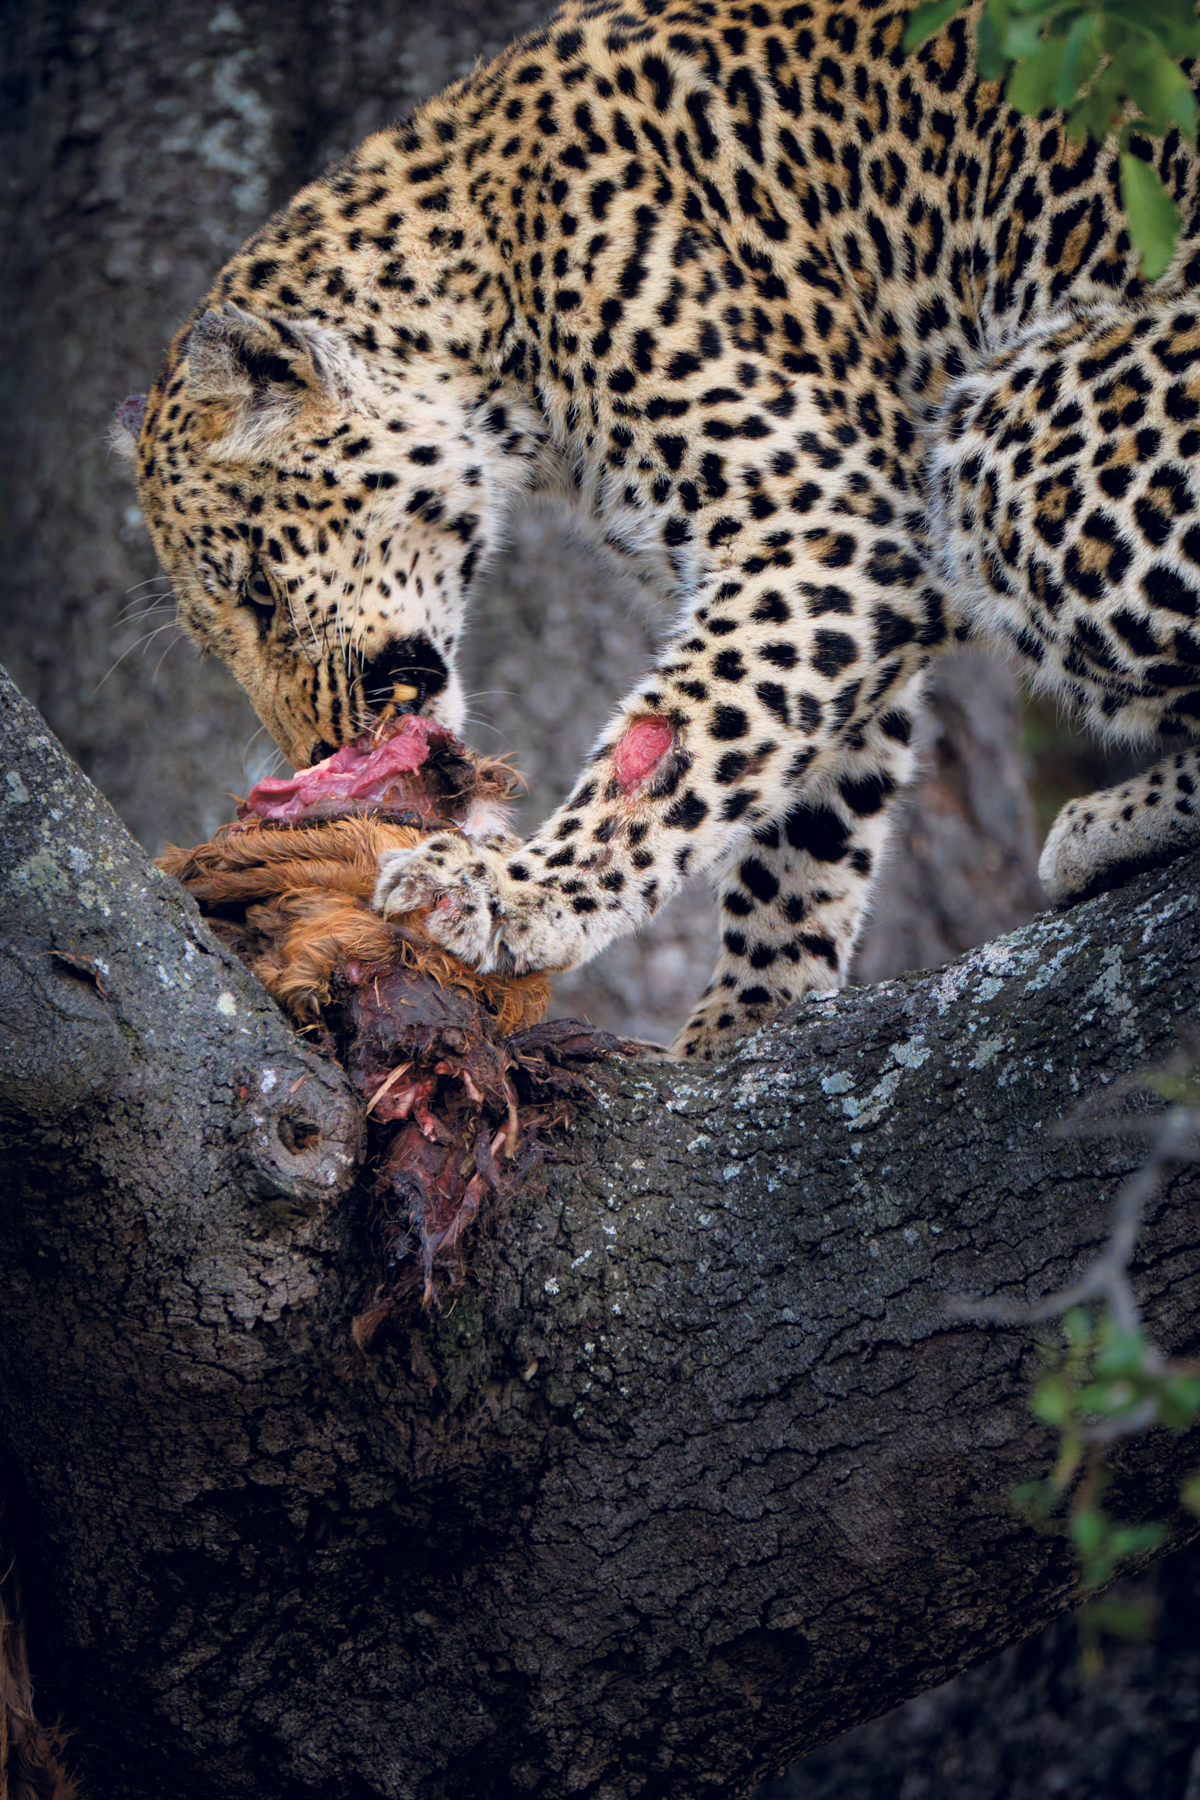 Alan-Hewitt-Leopard eating prey